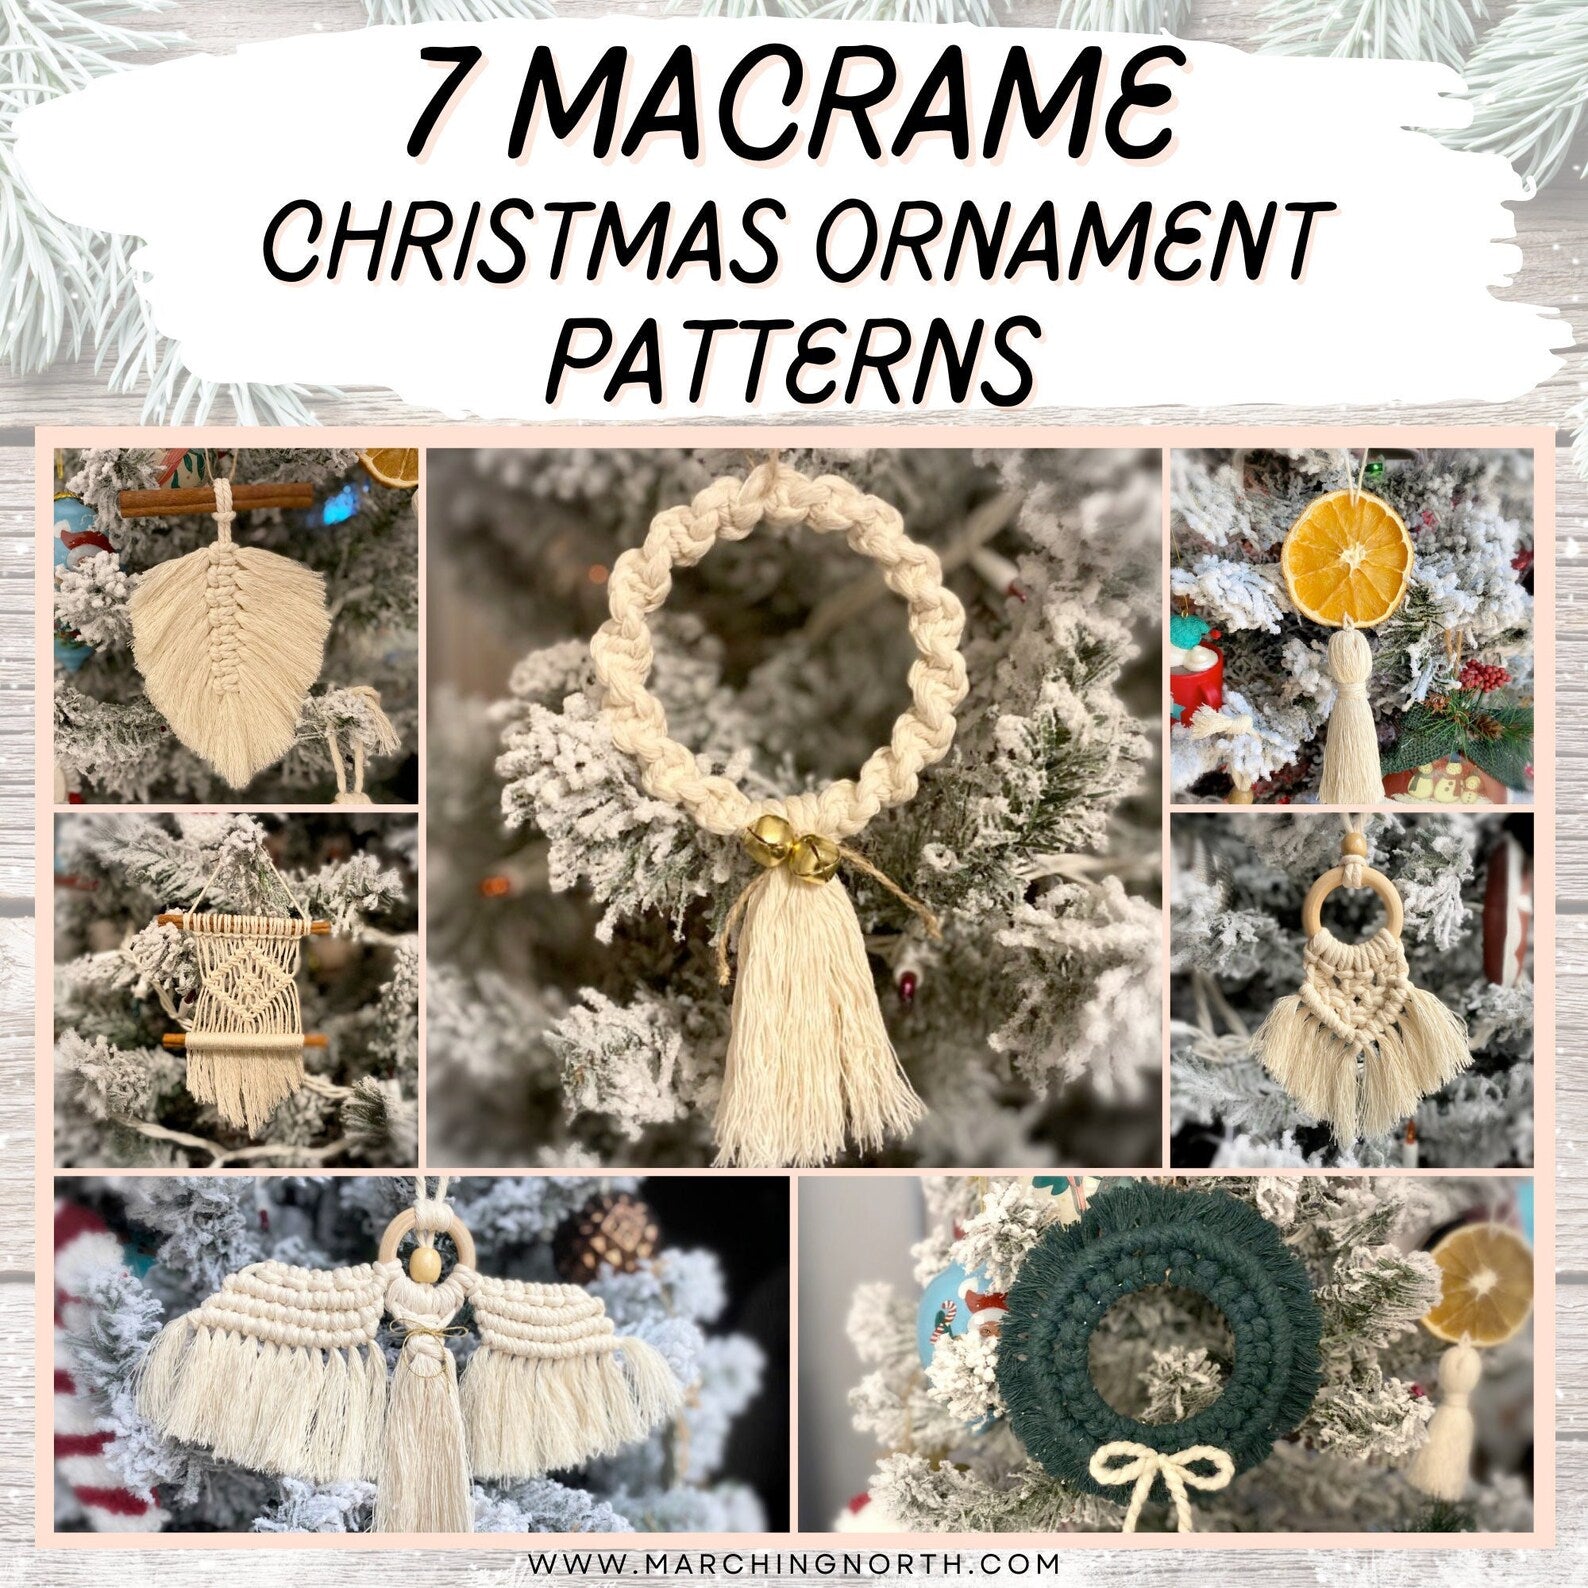 7 Macrame Christmas Ornament Patterns